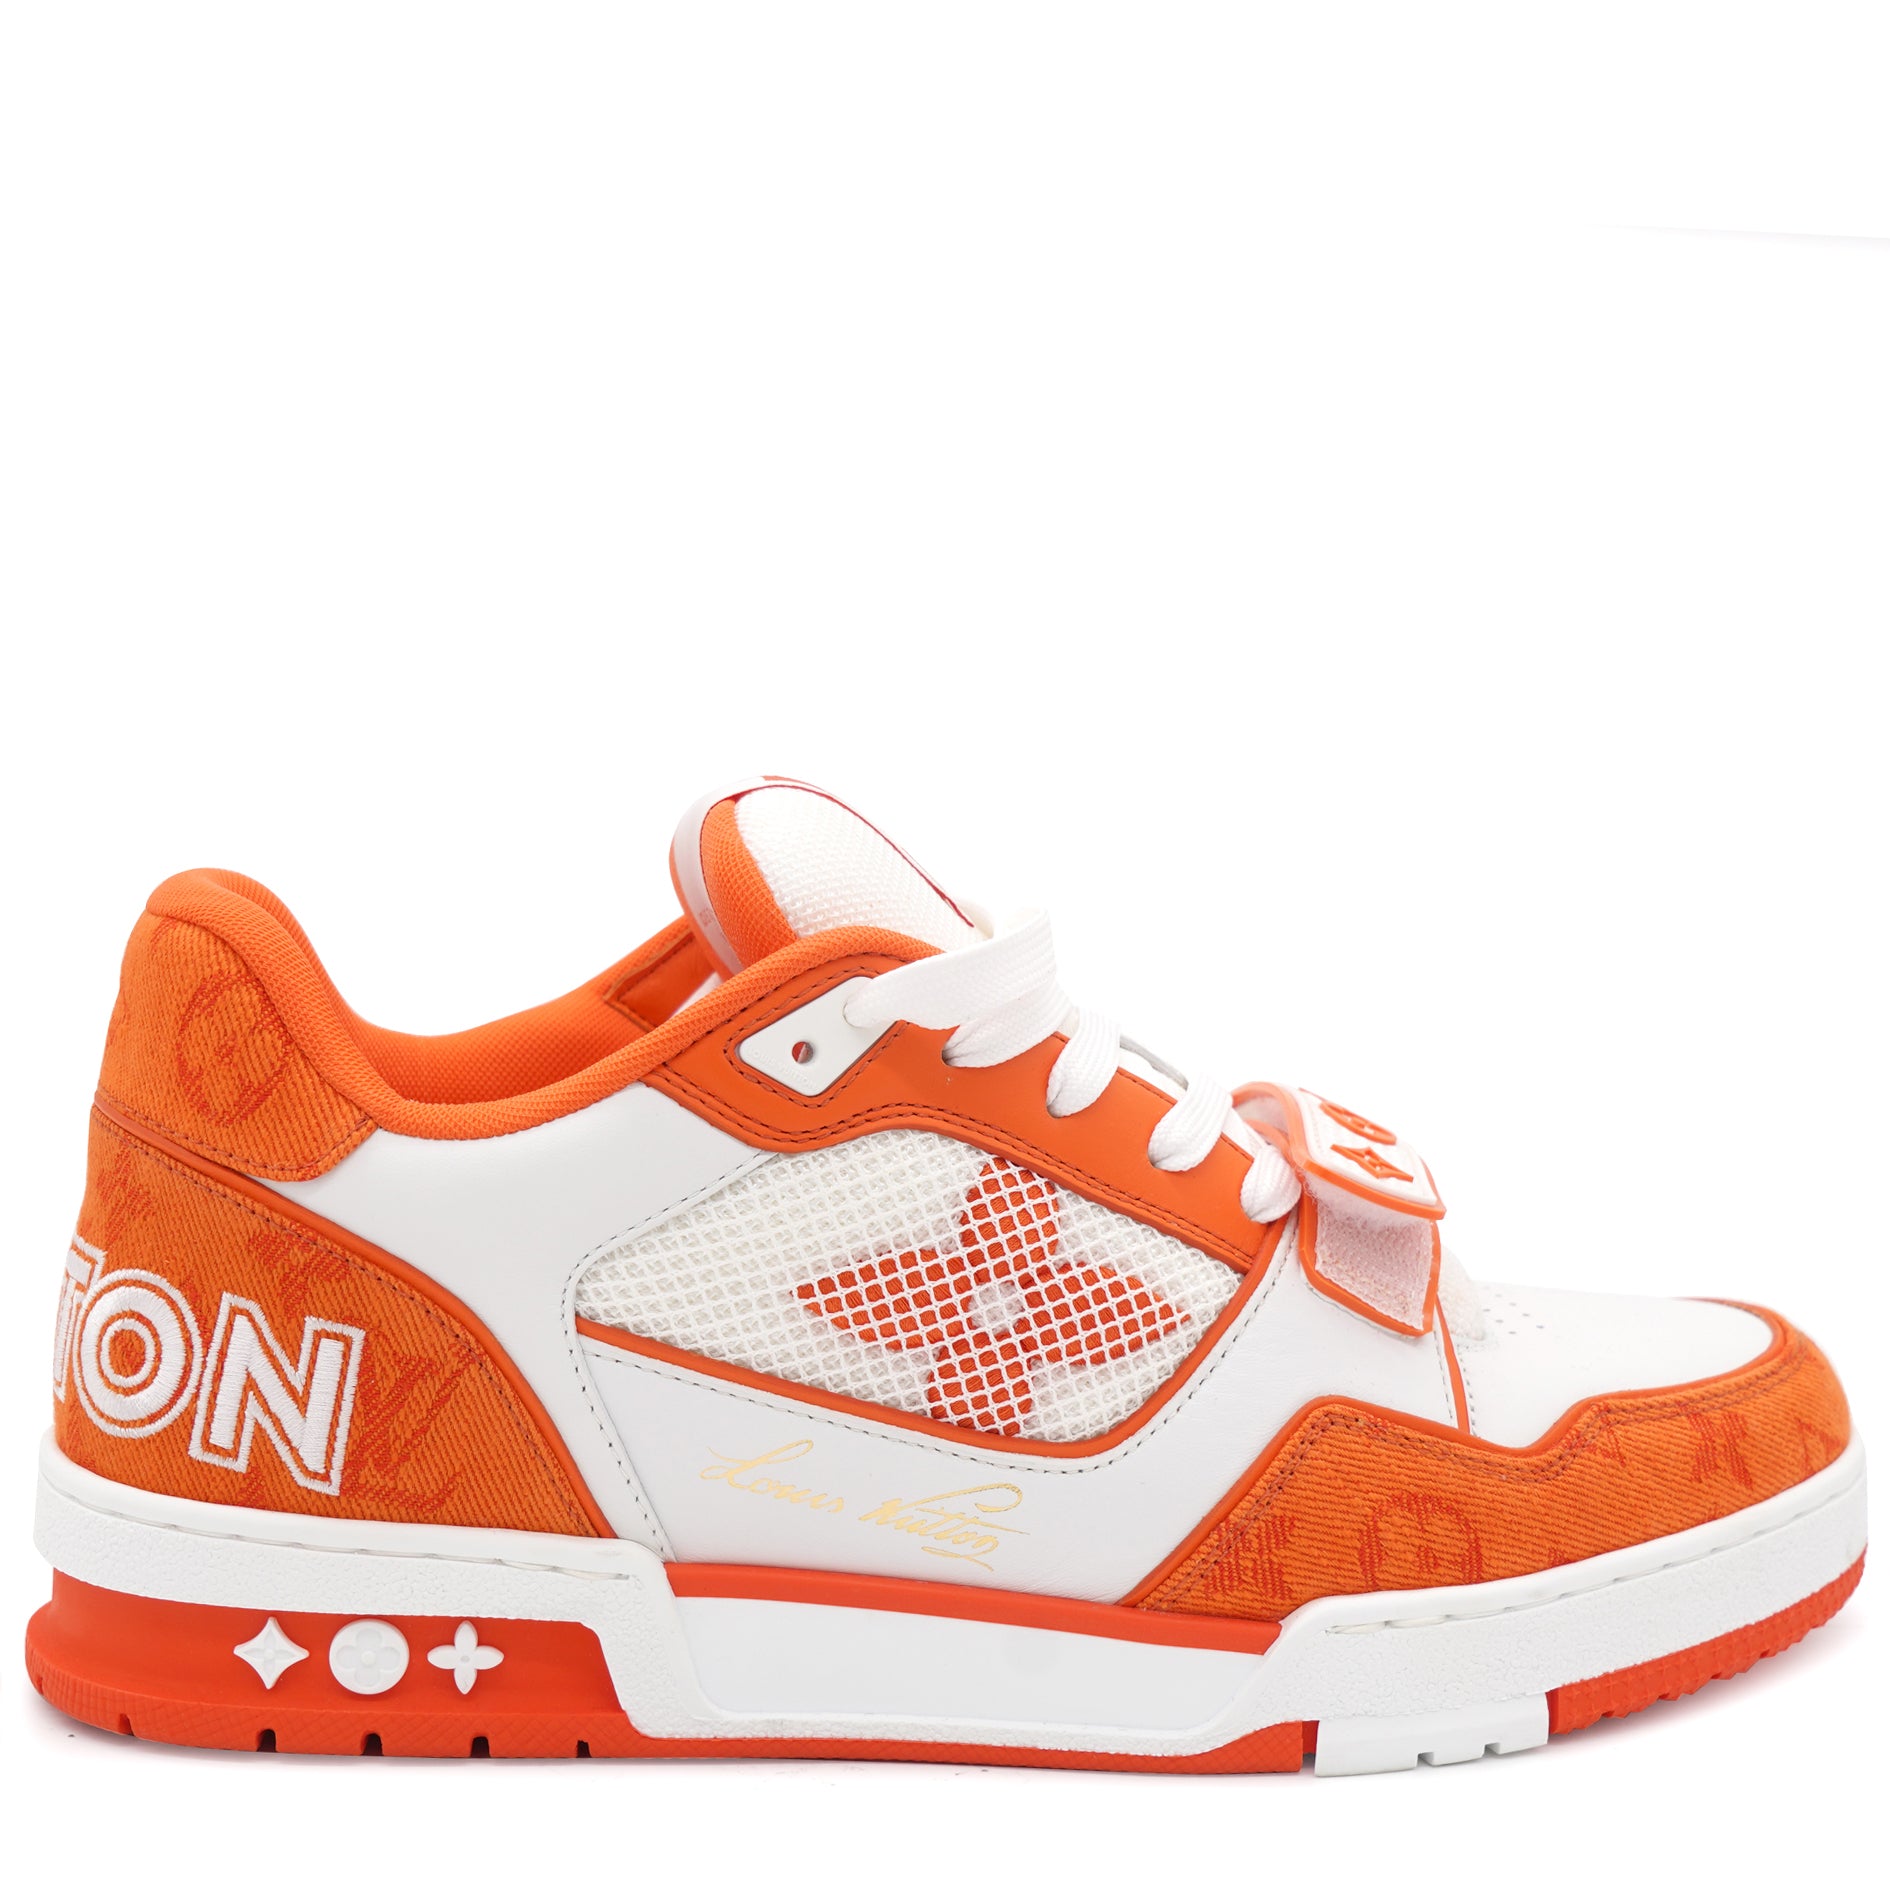 Louis Vuitton LV Trainer Sneaker Monogram Denim with Strap Orange